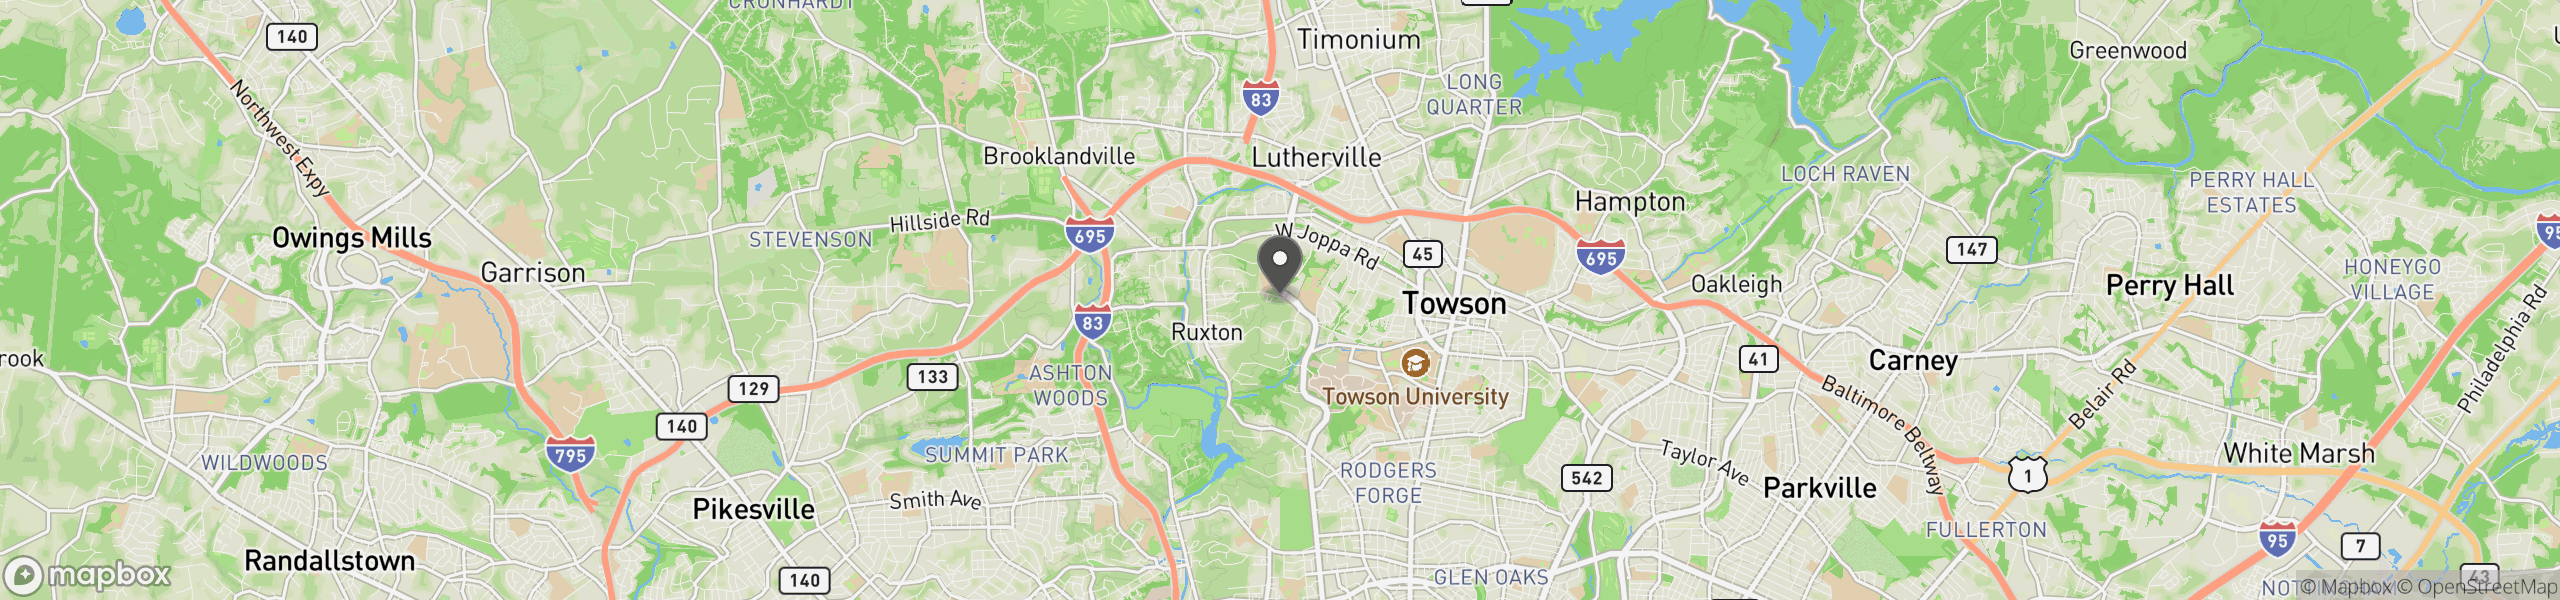 Towson, MD 21204